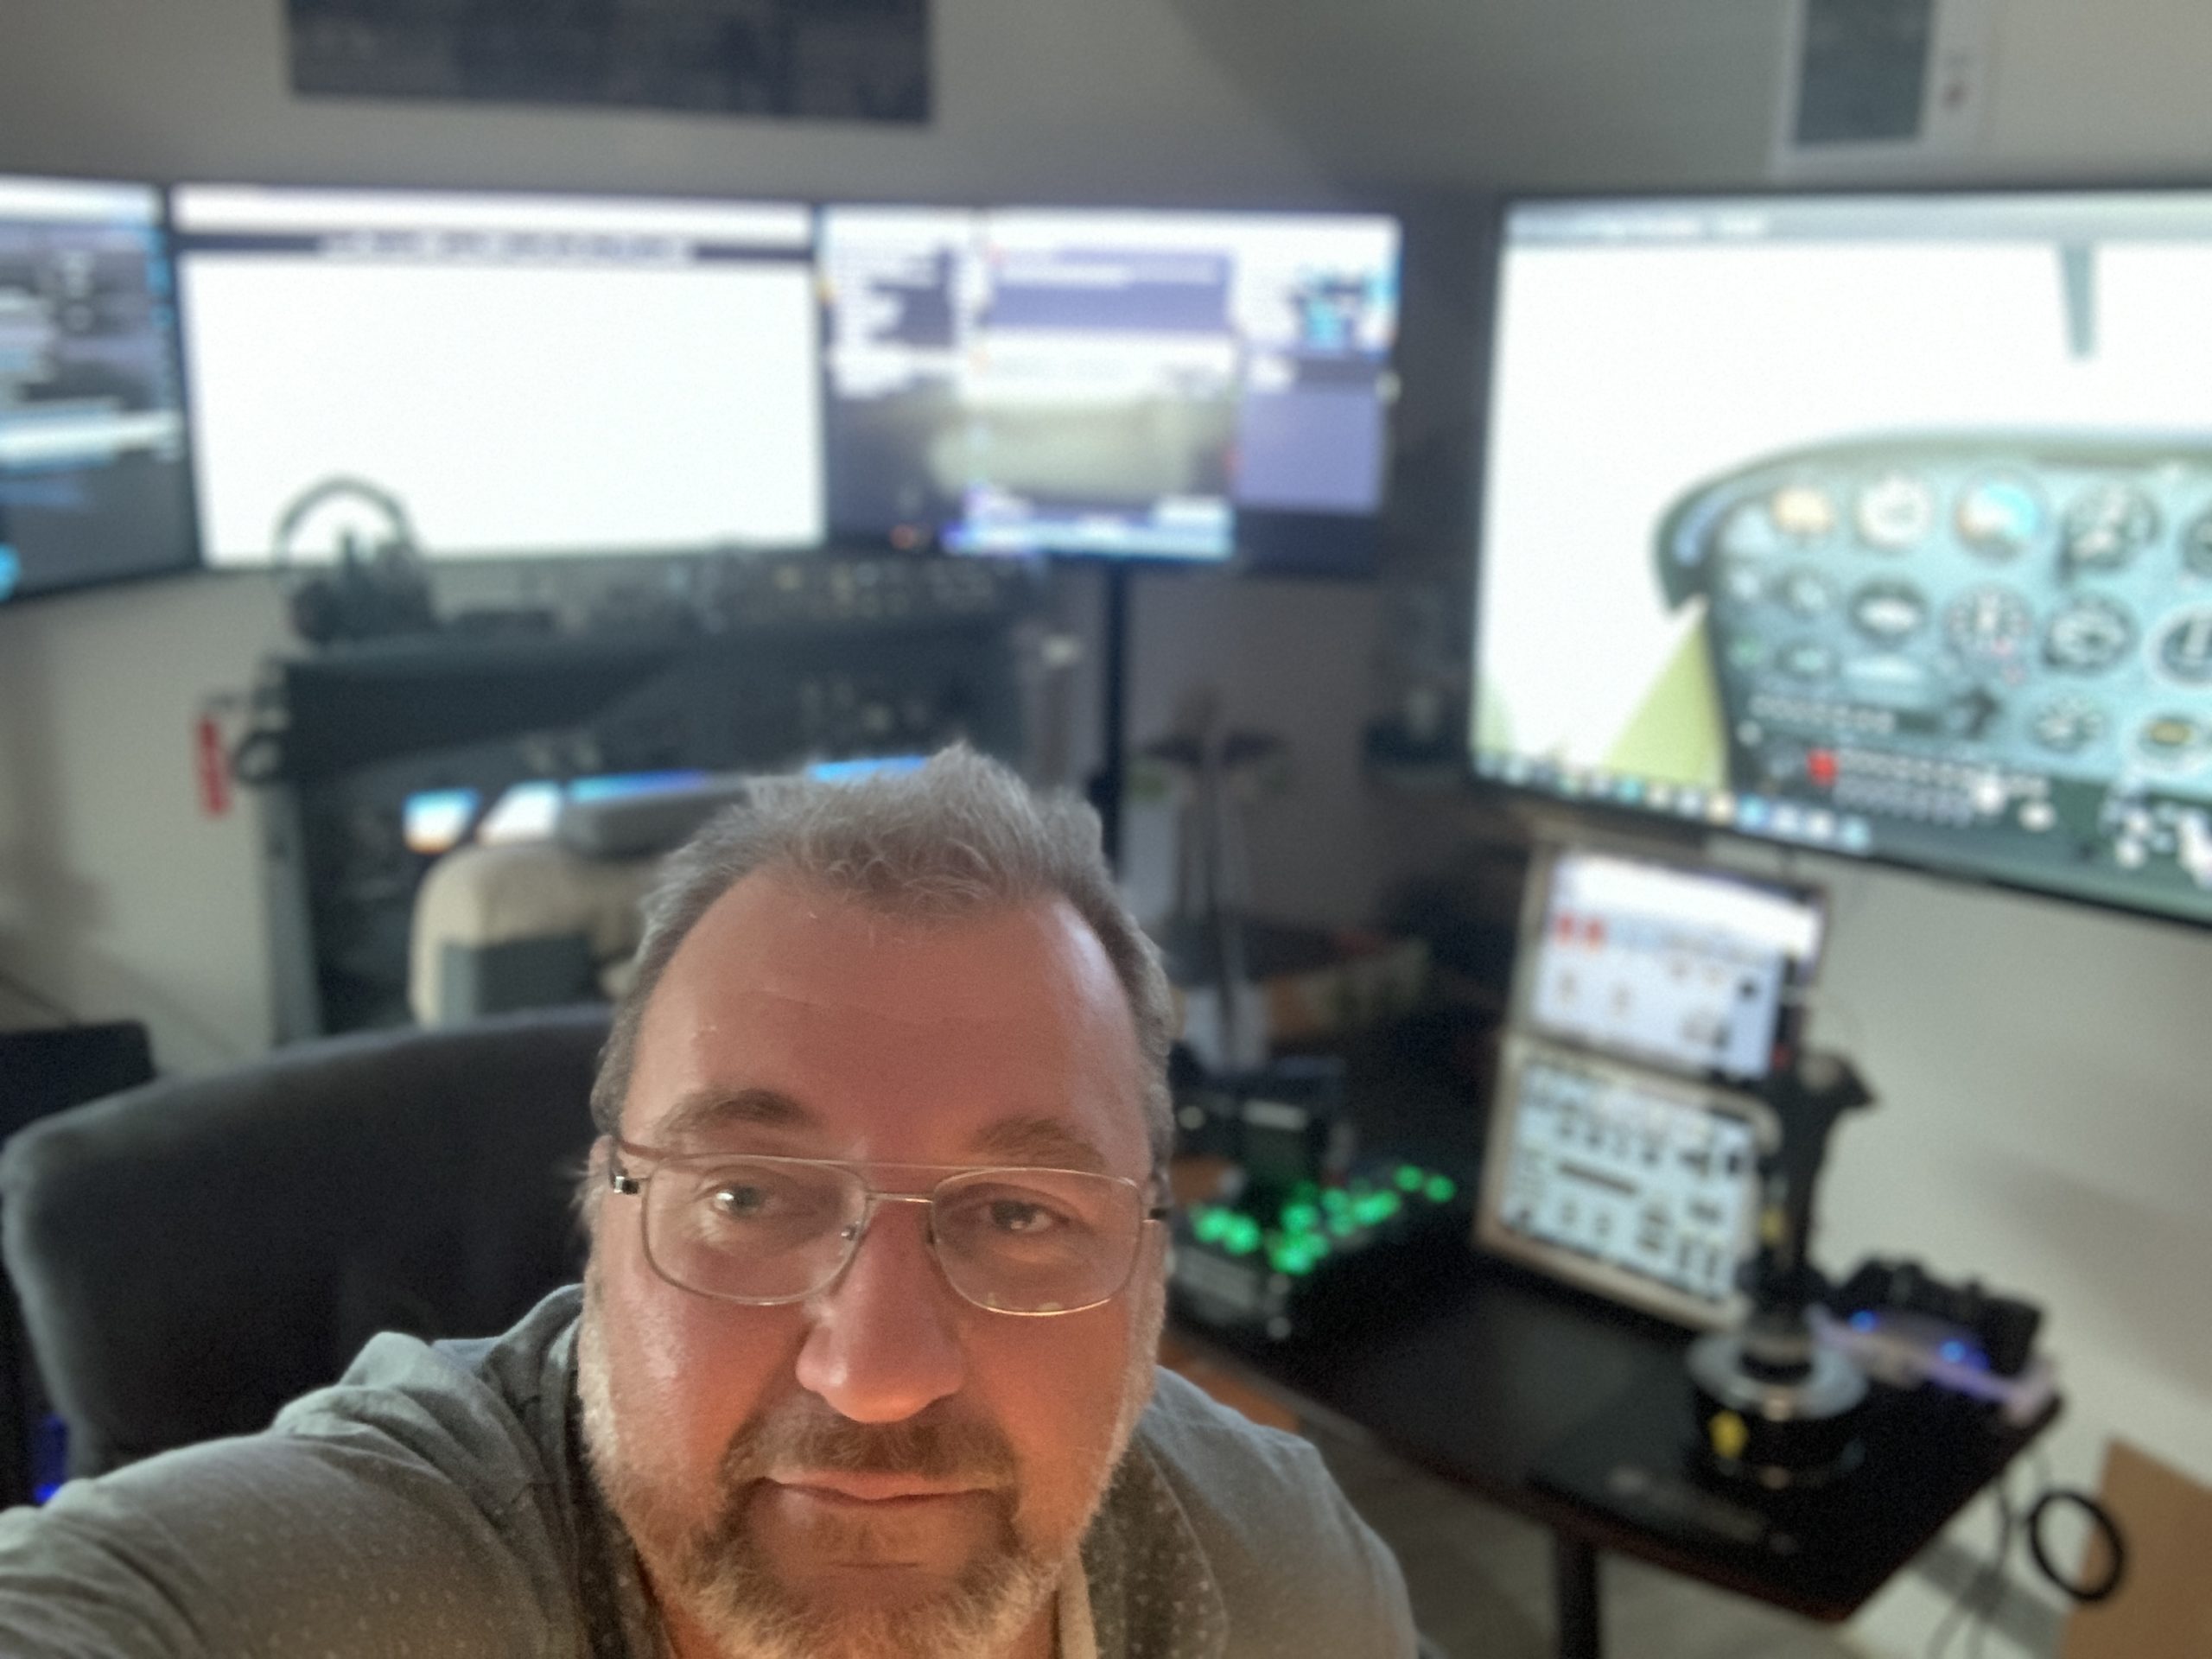 TUTO#2 : cockpit maison FLIGHT SIMULATOR 2020 - PETIT BUDGET 